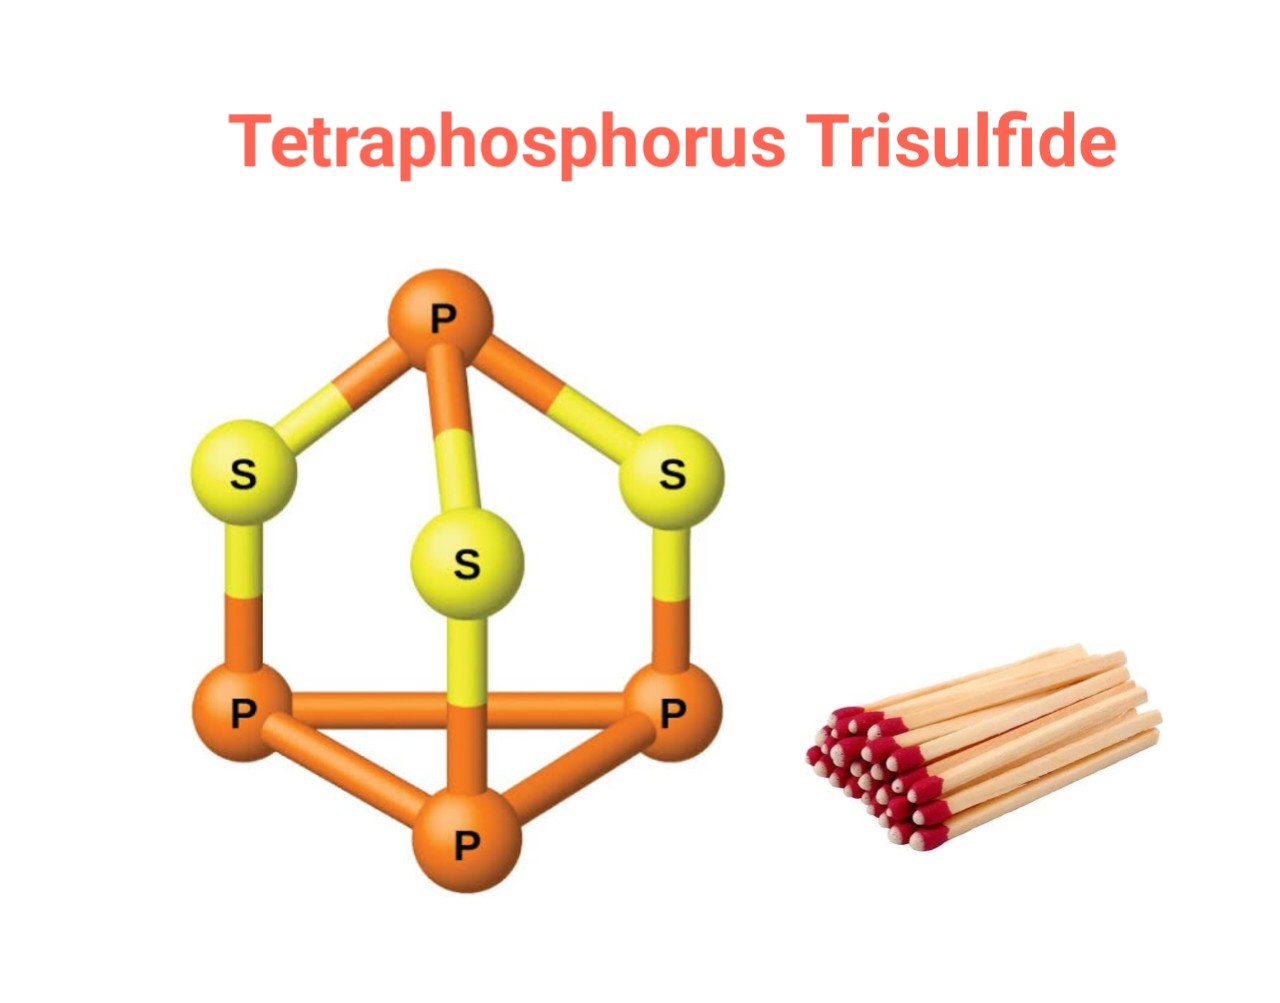 Tetraphosphorus Trisulfide